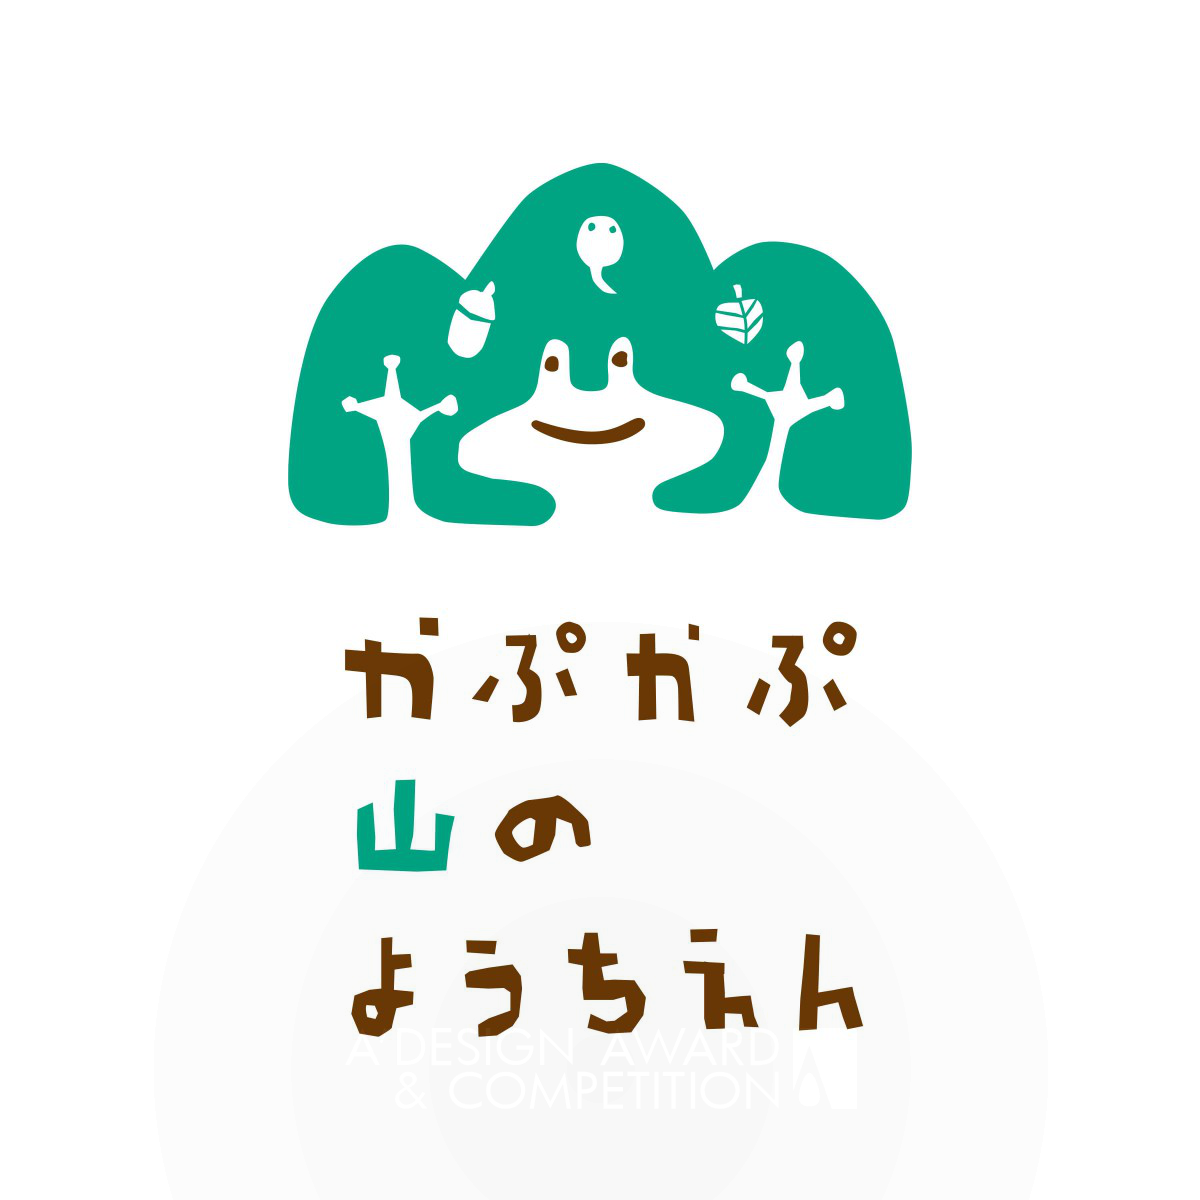 Capu capu forest kindergarten <b>Logo